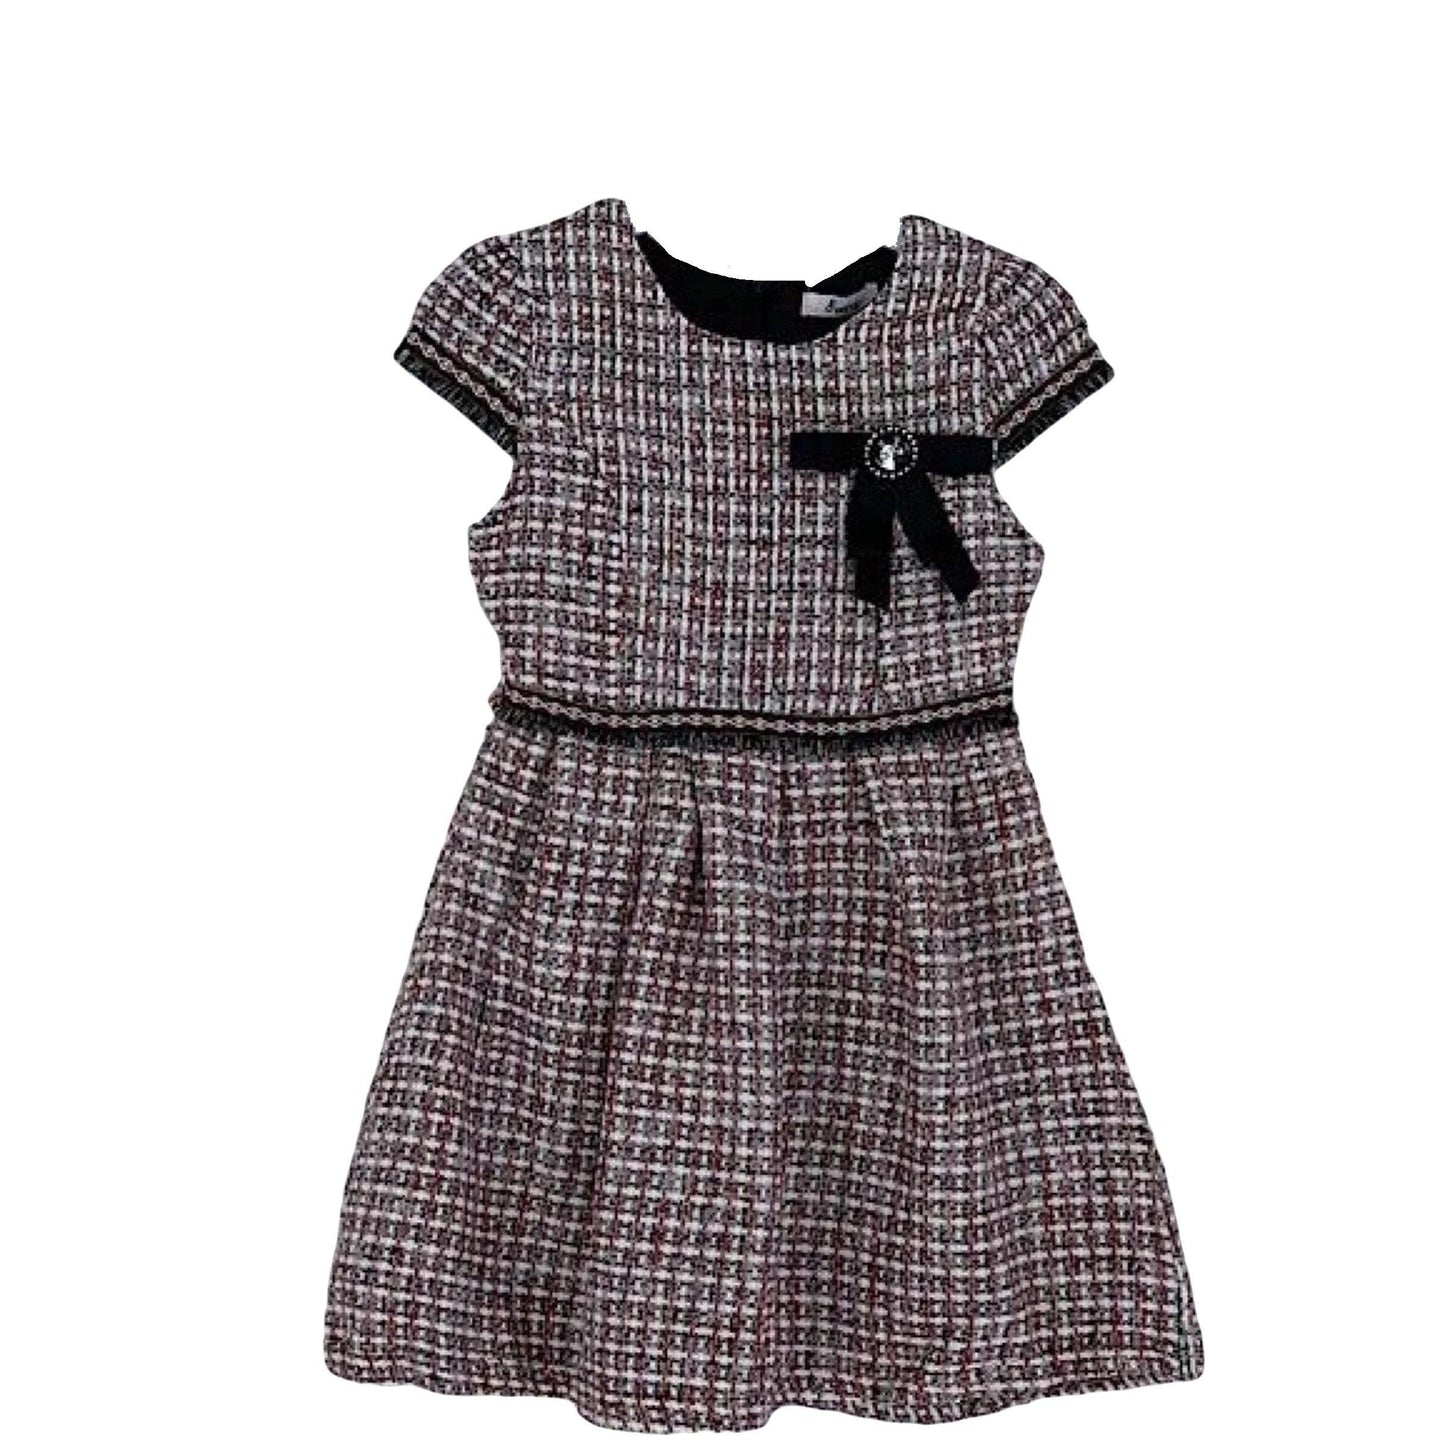 Girls Tweed Box Pleat Dress | Oscar & Me | Baby & Children’s Clothing & Accessories